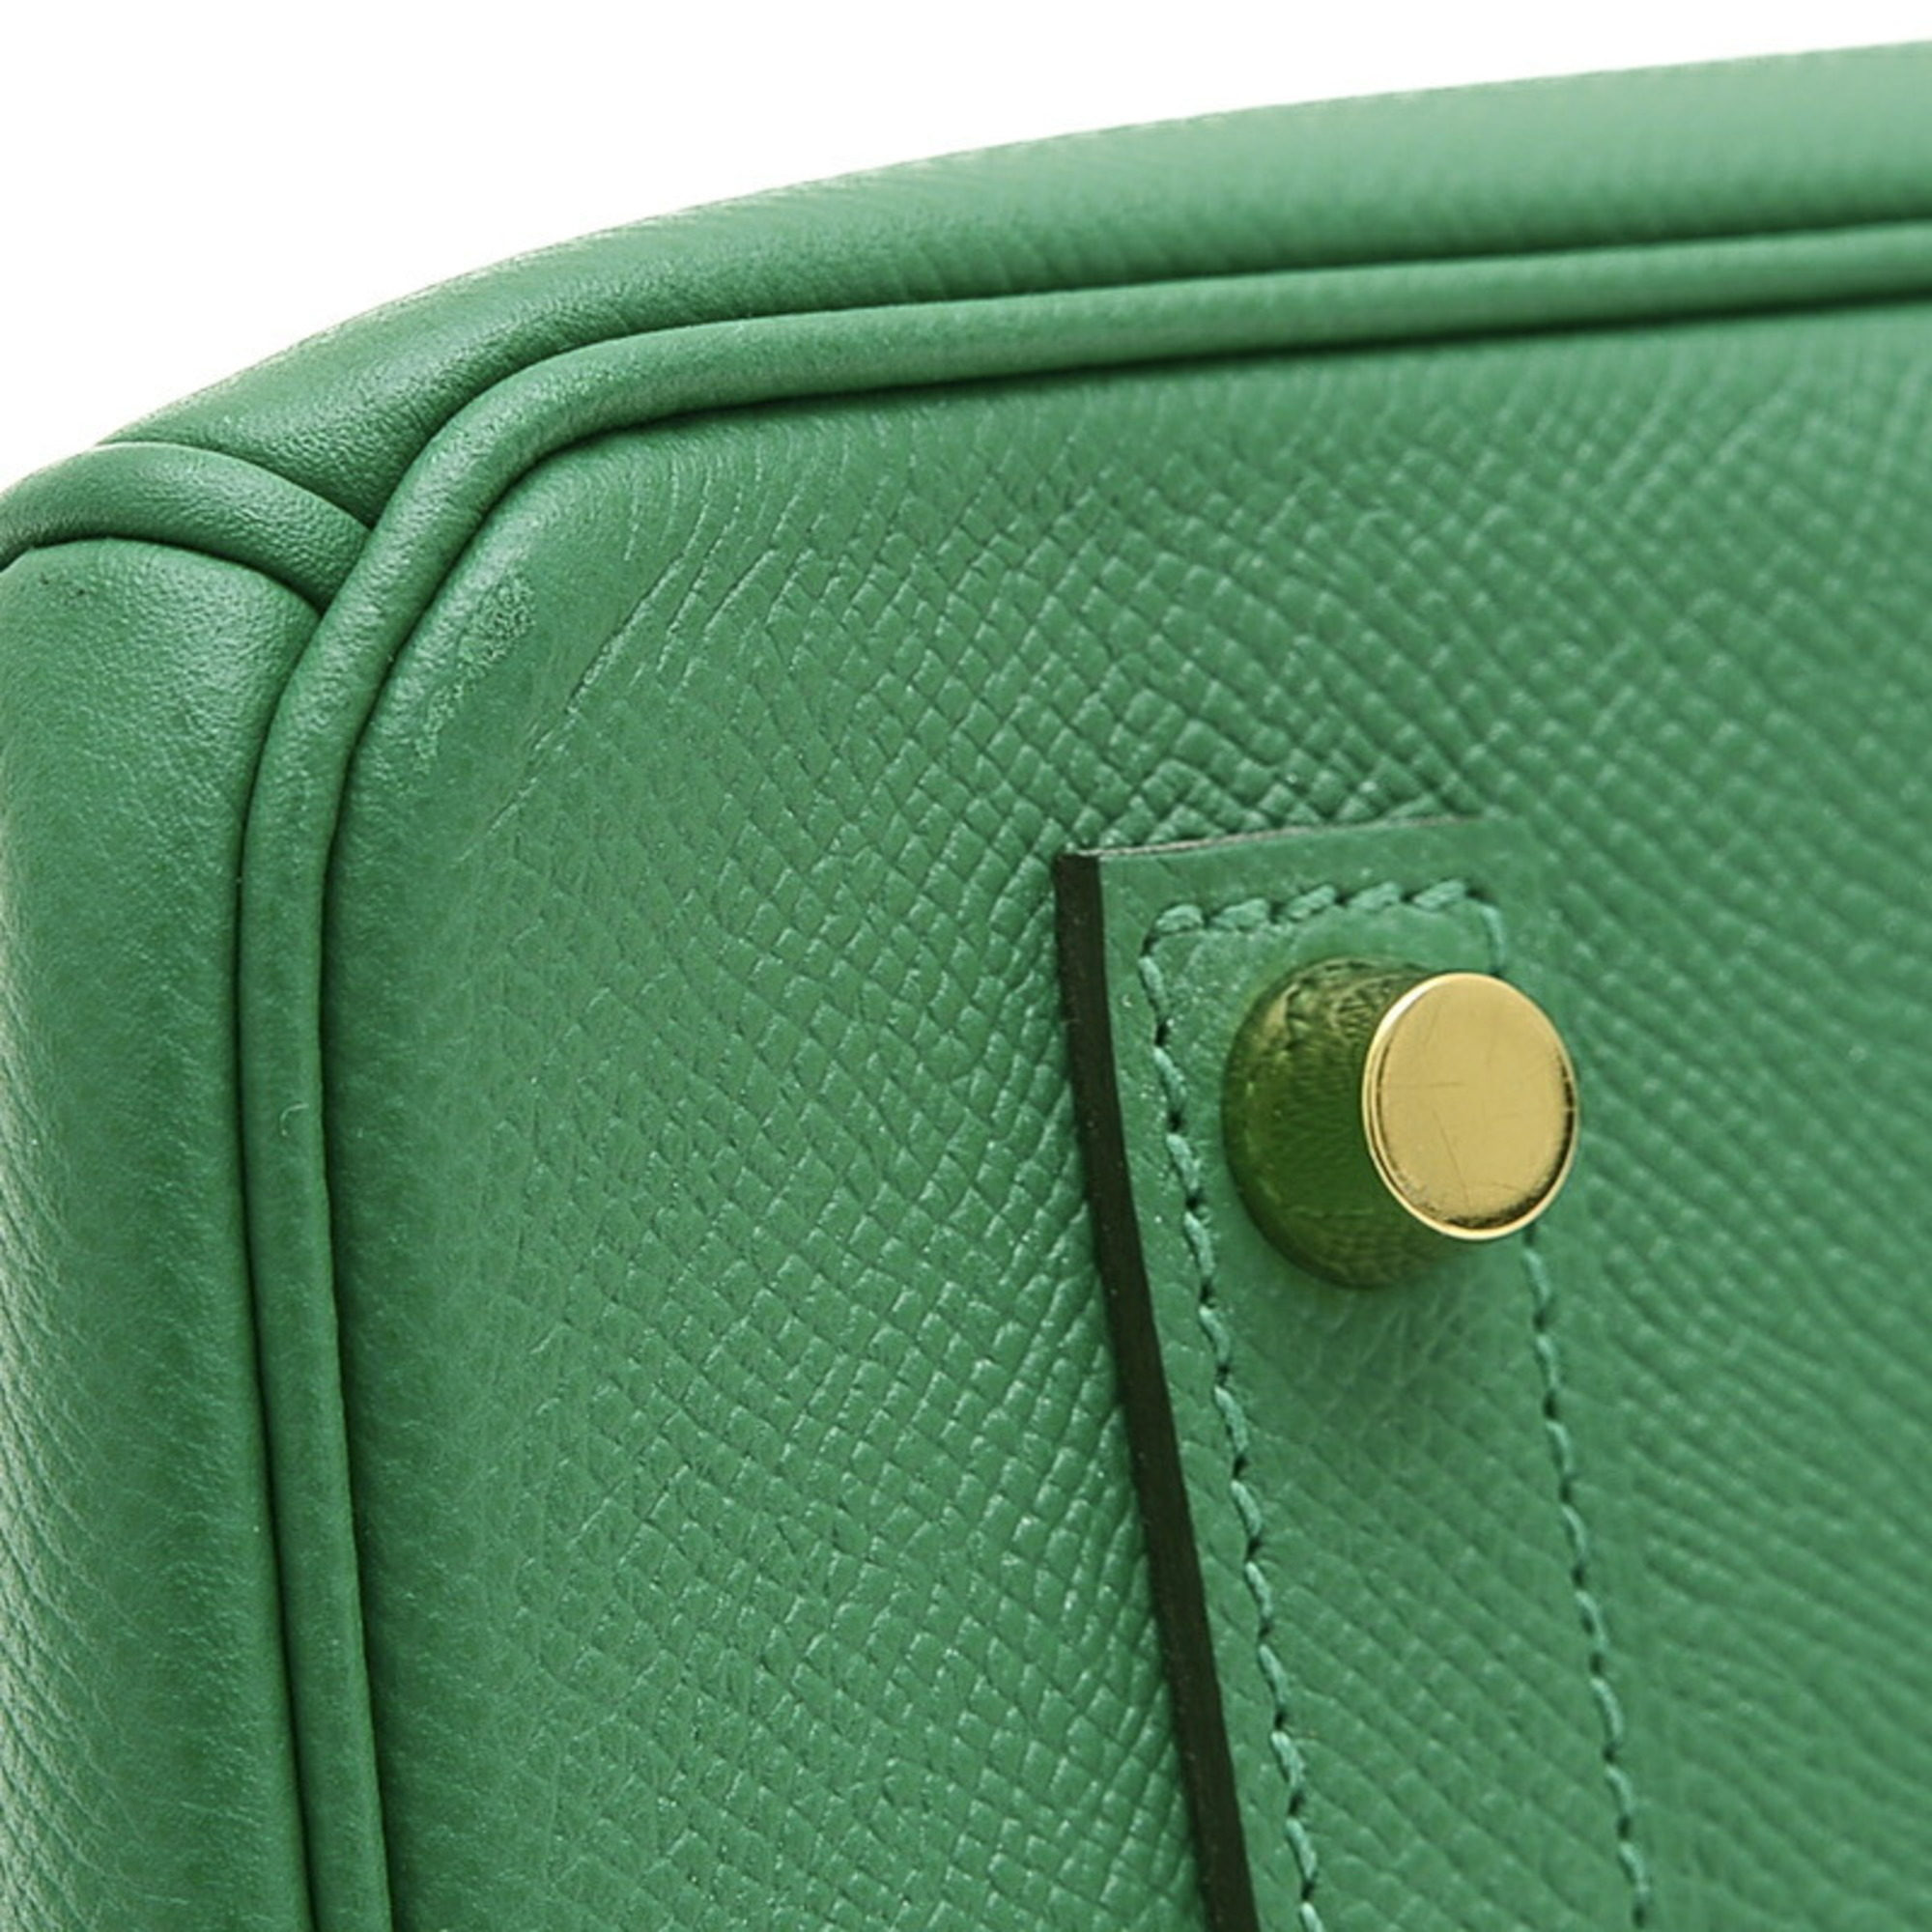 Hermes Birkin 35 handbag Epson Cactus C stamp